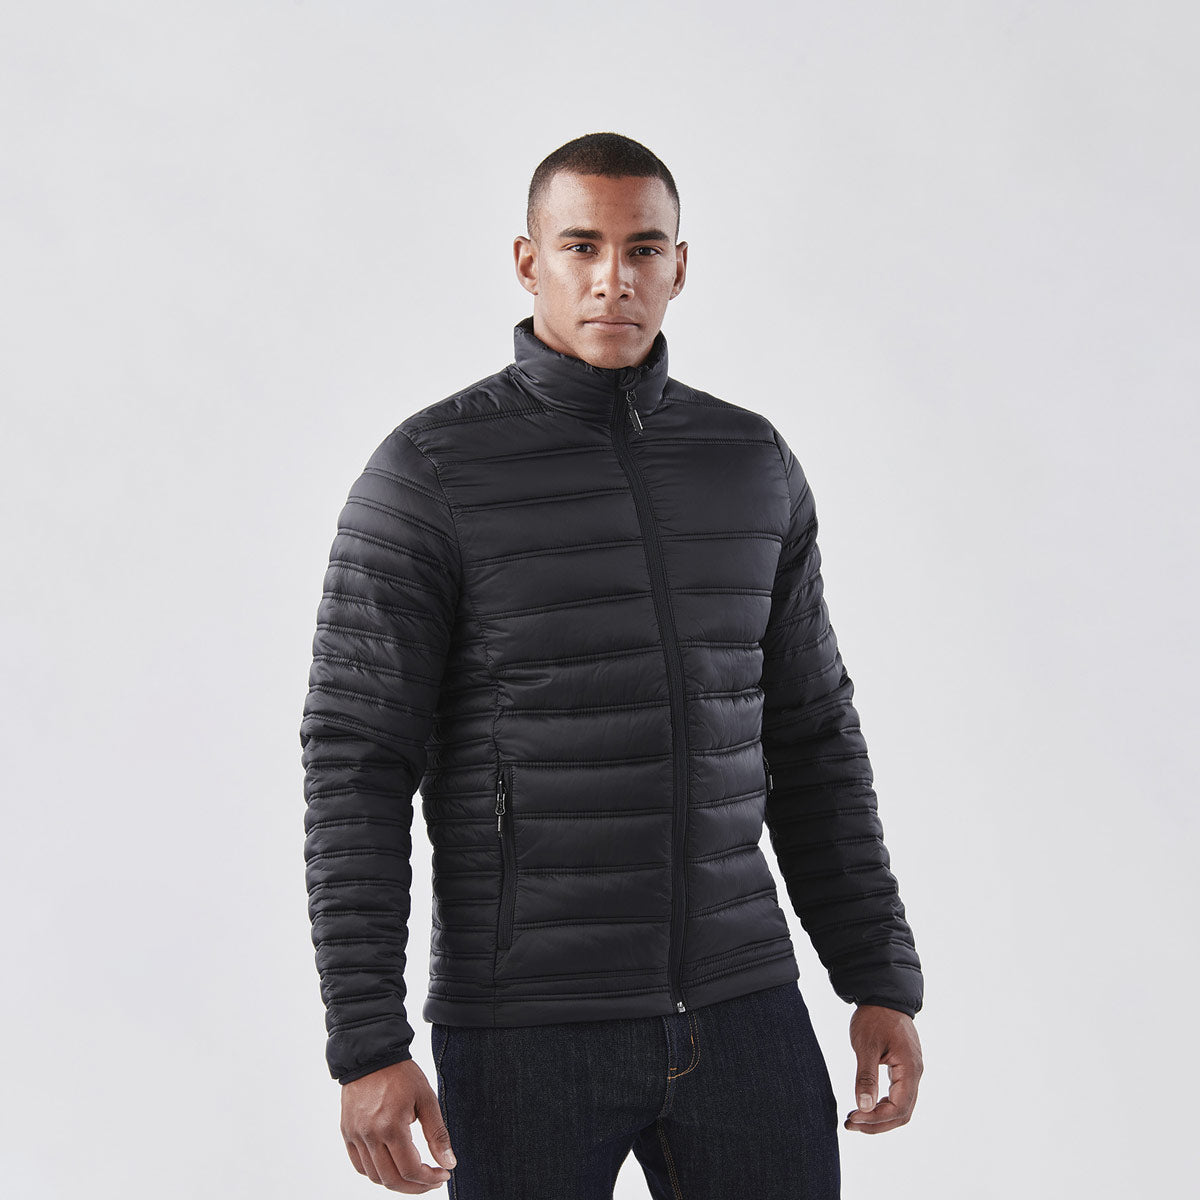 Outdoorweb.eu - M's Thermal Jacket Epidote Green - men's thermal jacket -  POC - 181.92 € - outdoorové oblečení a vybavení shop